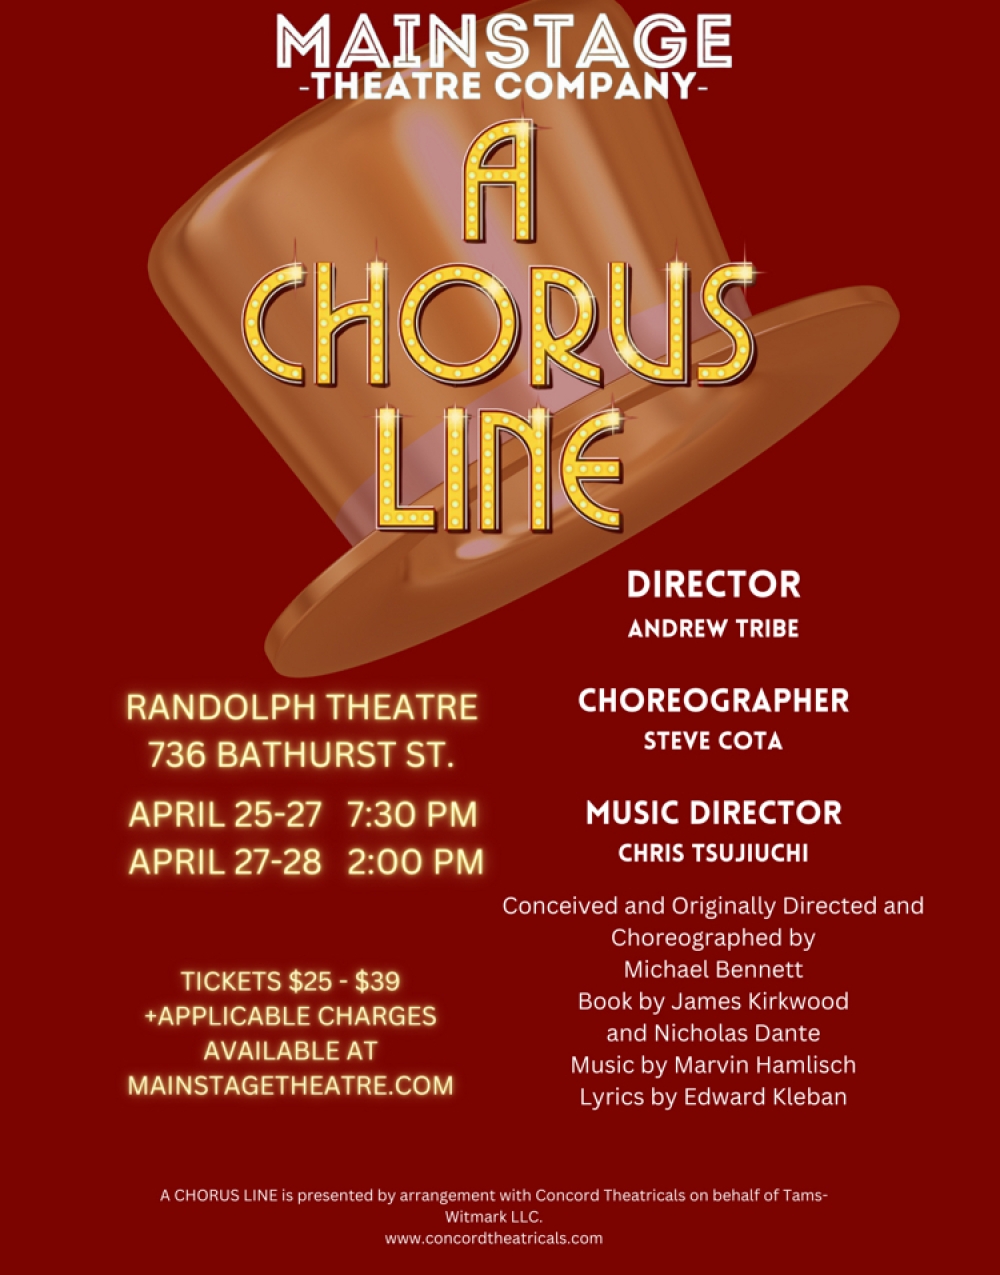 A Chorus Line - The Randolph Theatre Stage Mag